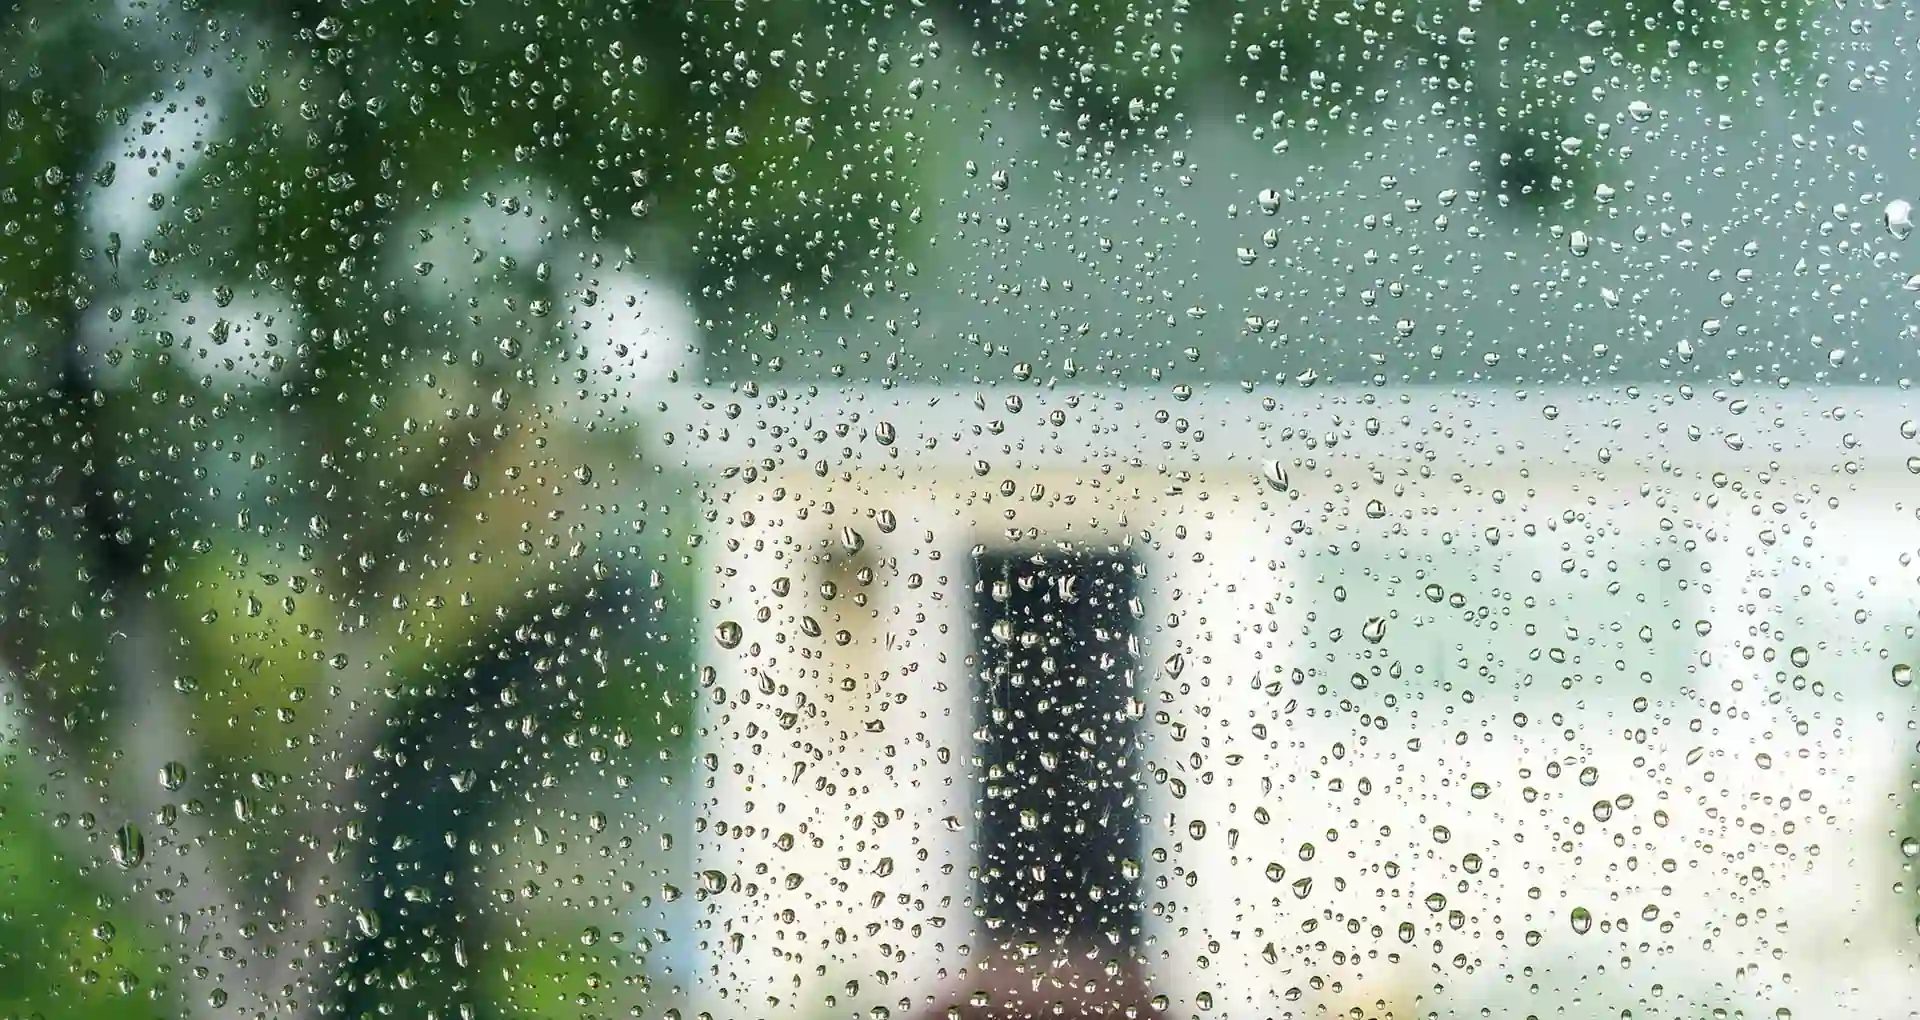 Water on house window.